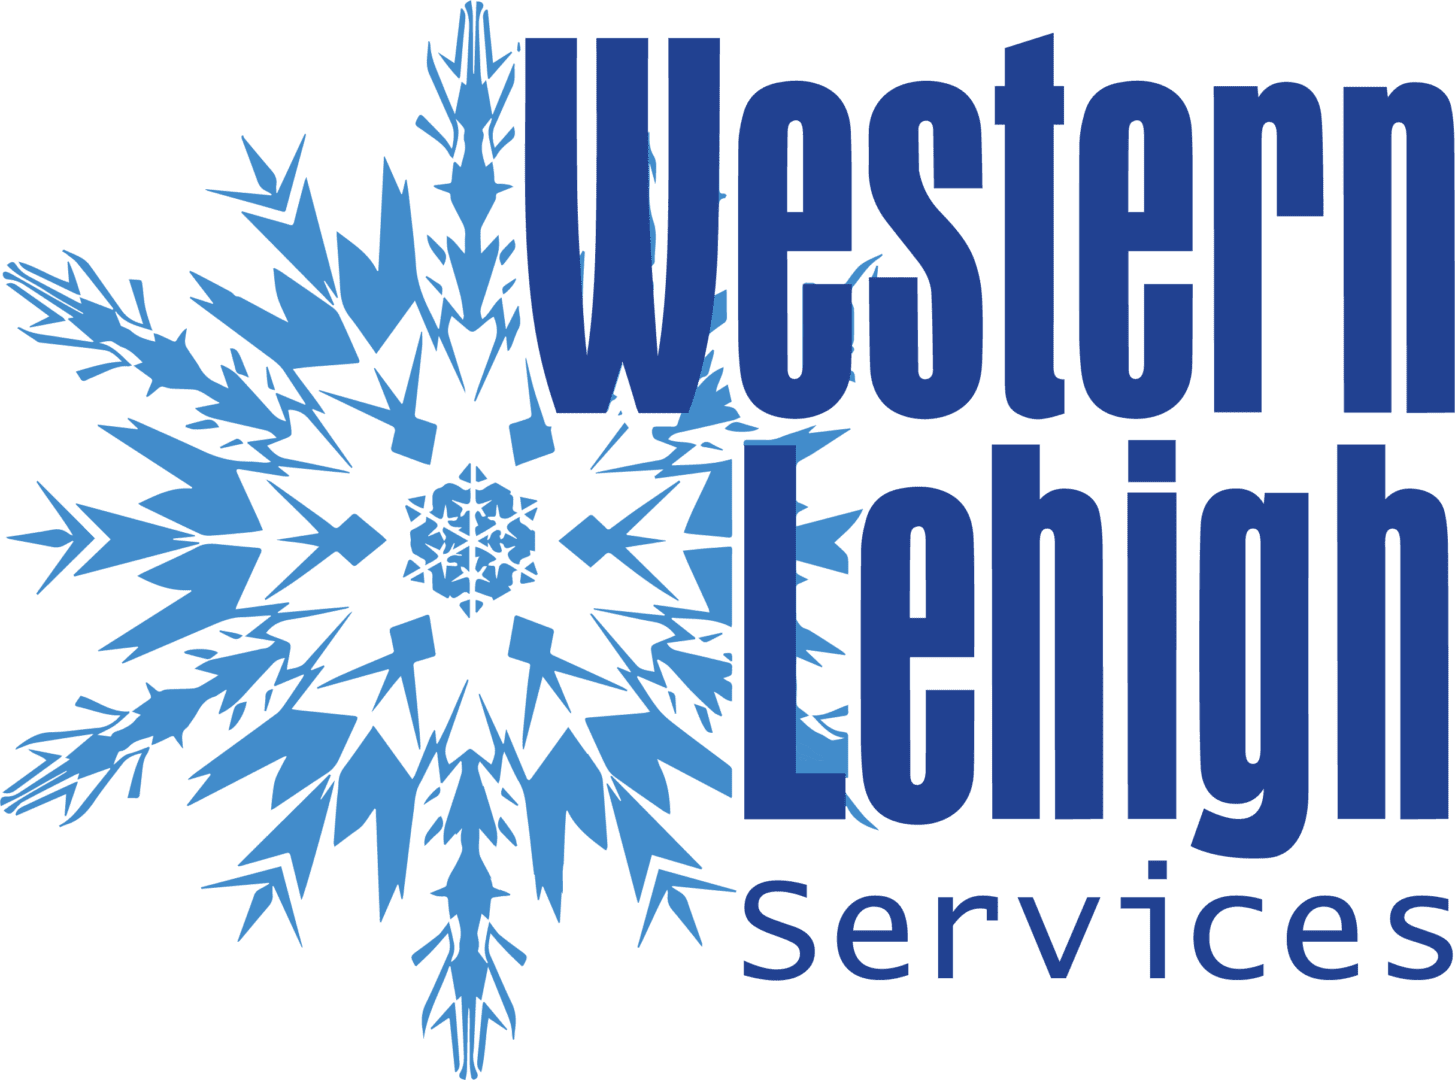 Western lehigh services logo.